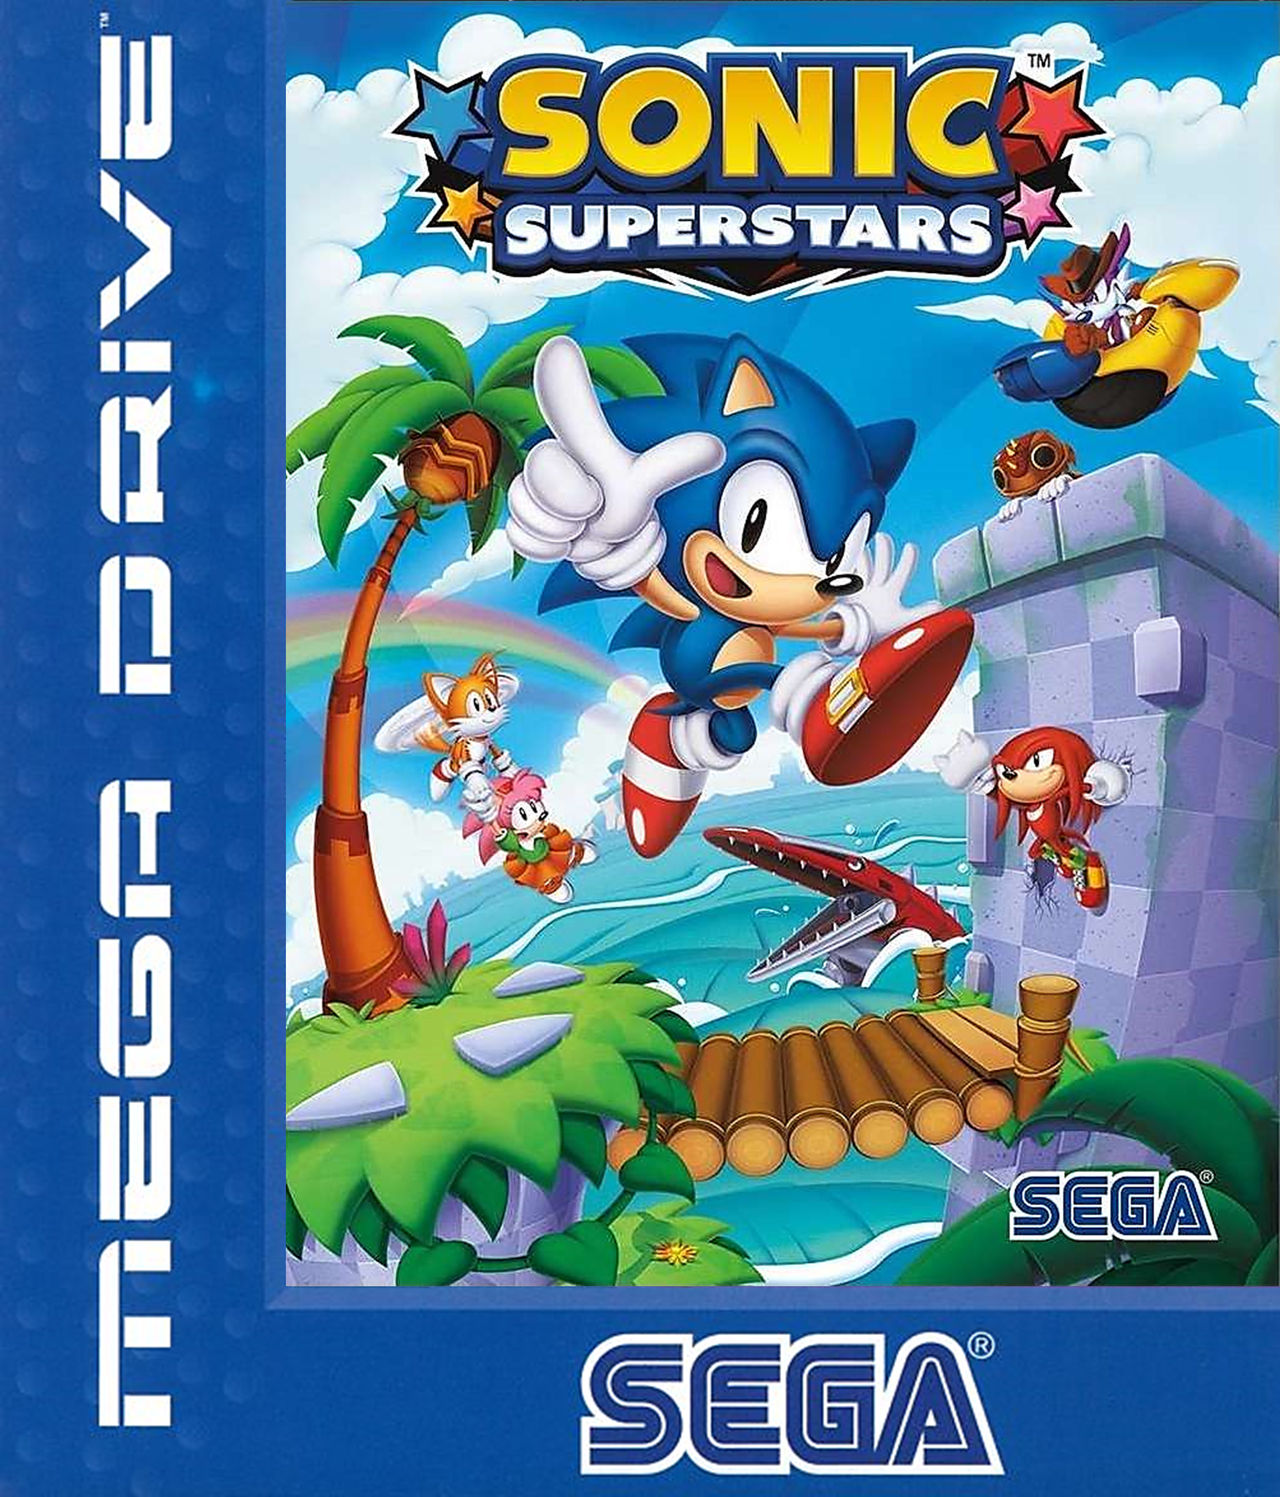 Sonic Superstars SEGA Mega Drive PAL Cover by gikesmanners1995 on DeviantArt